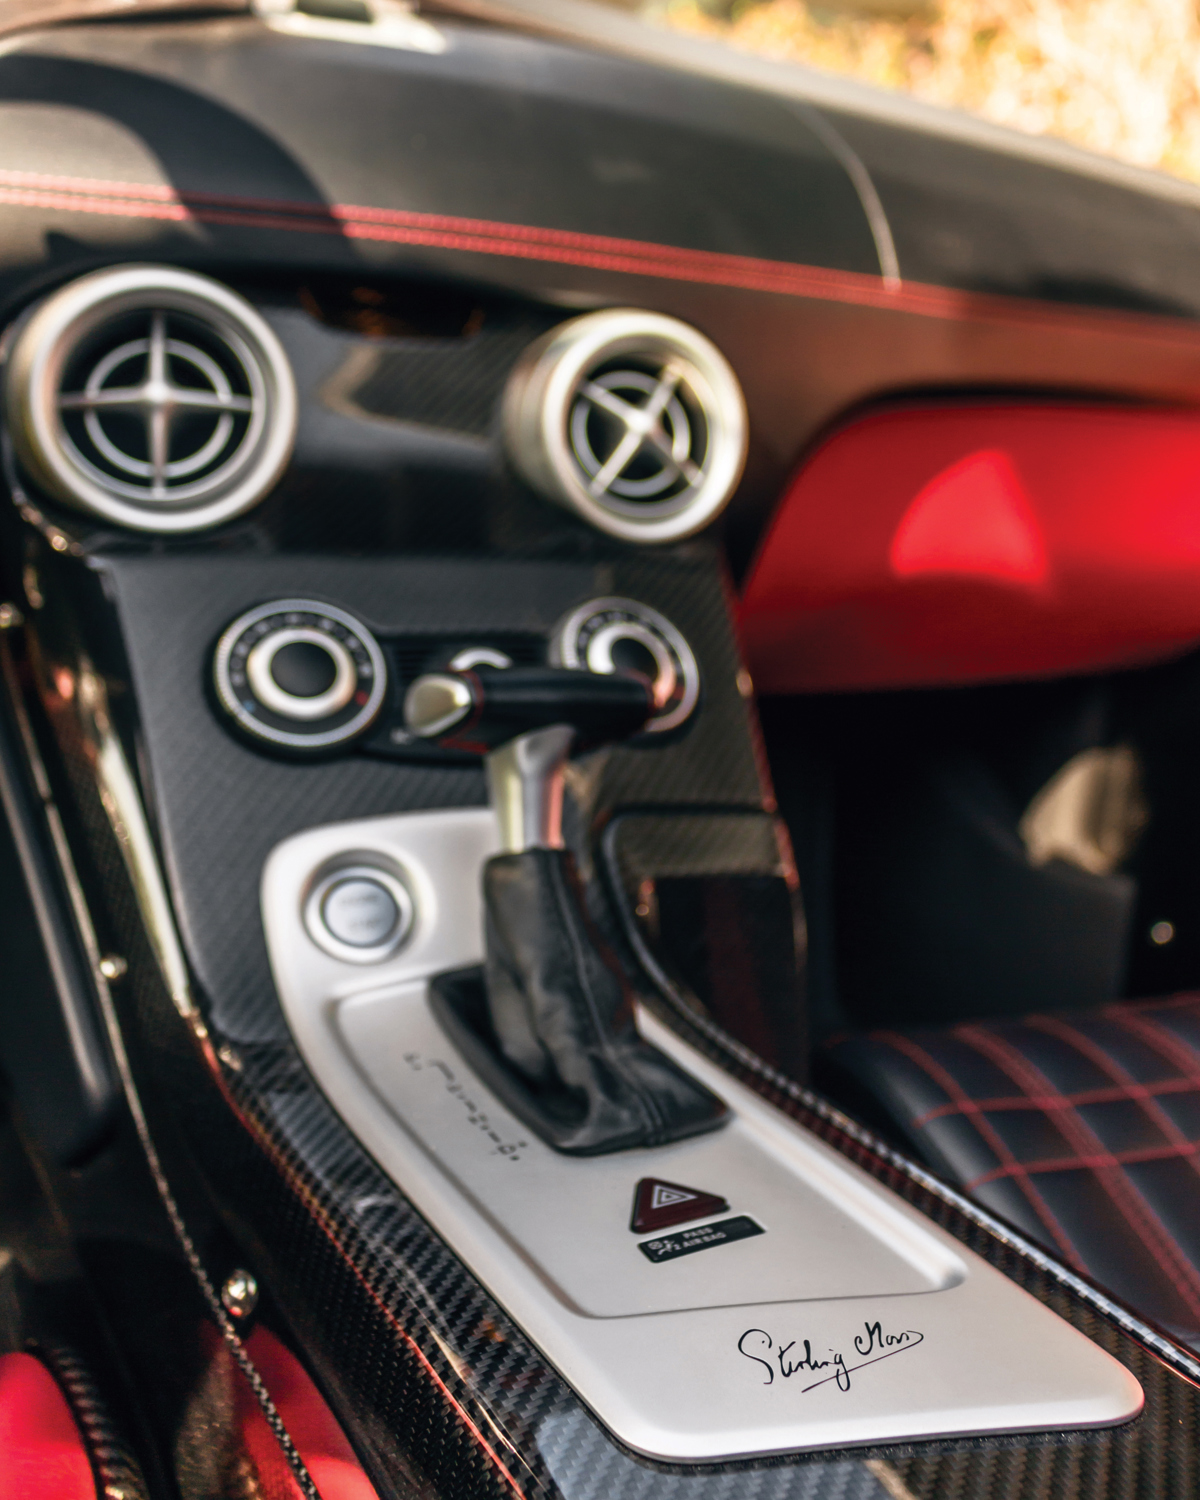 Stick shift of 2009 Mercedes-Benz SLR McLaren Stirling Moss offered at RM Sotheby’s Villa Erba live auction 2019